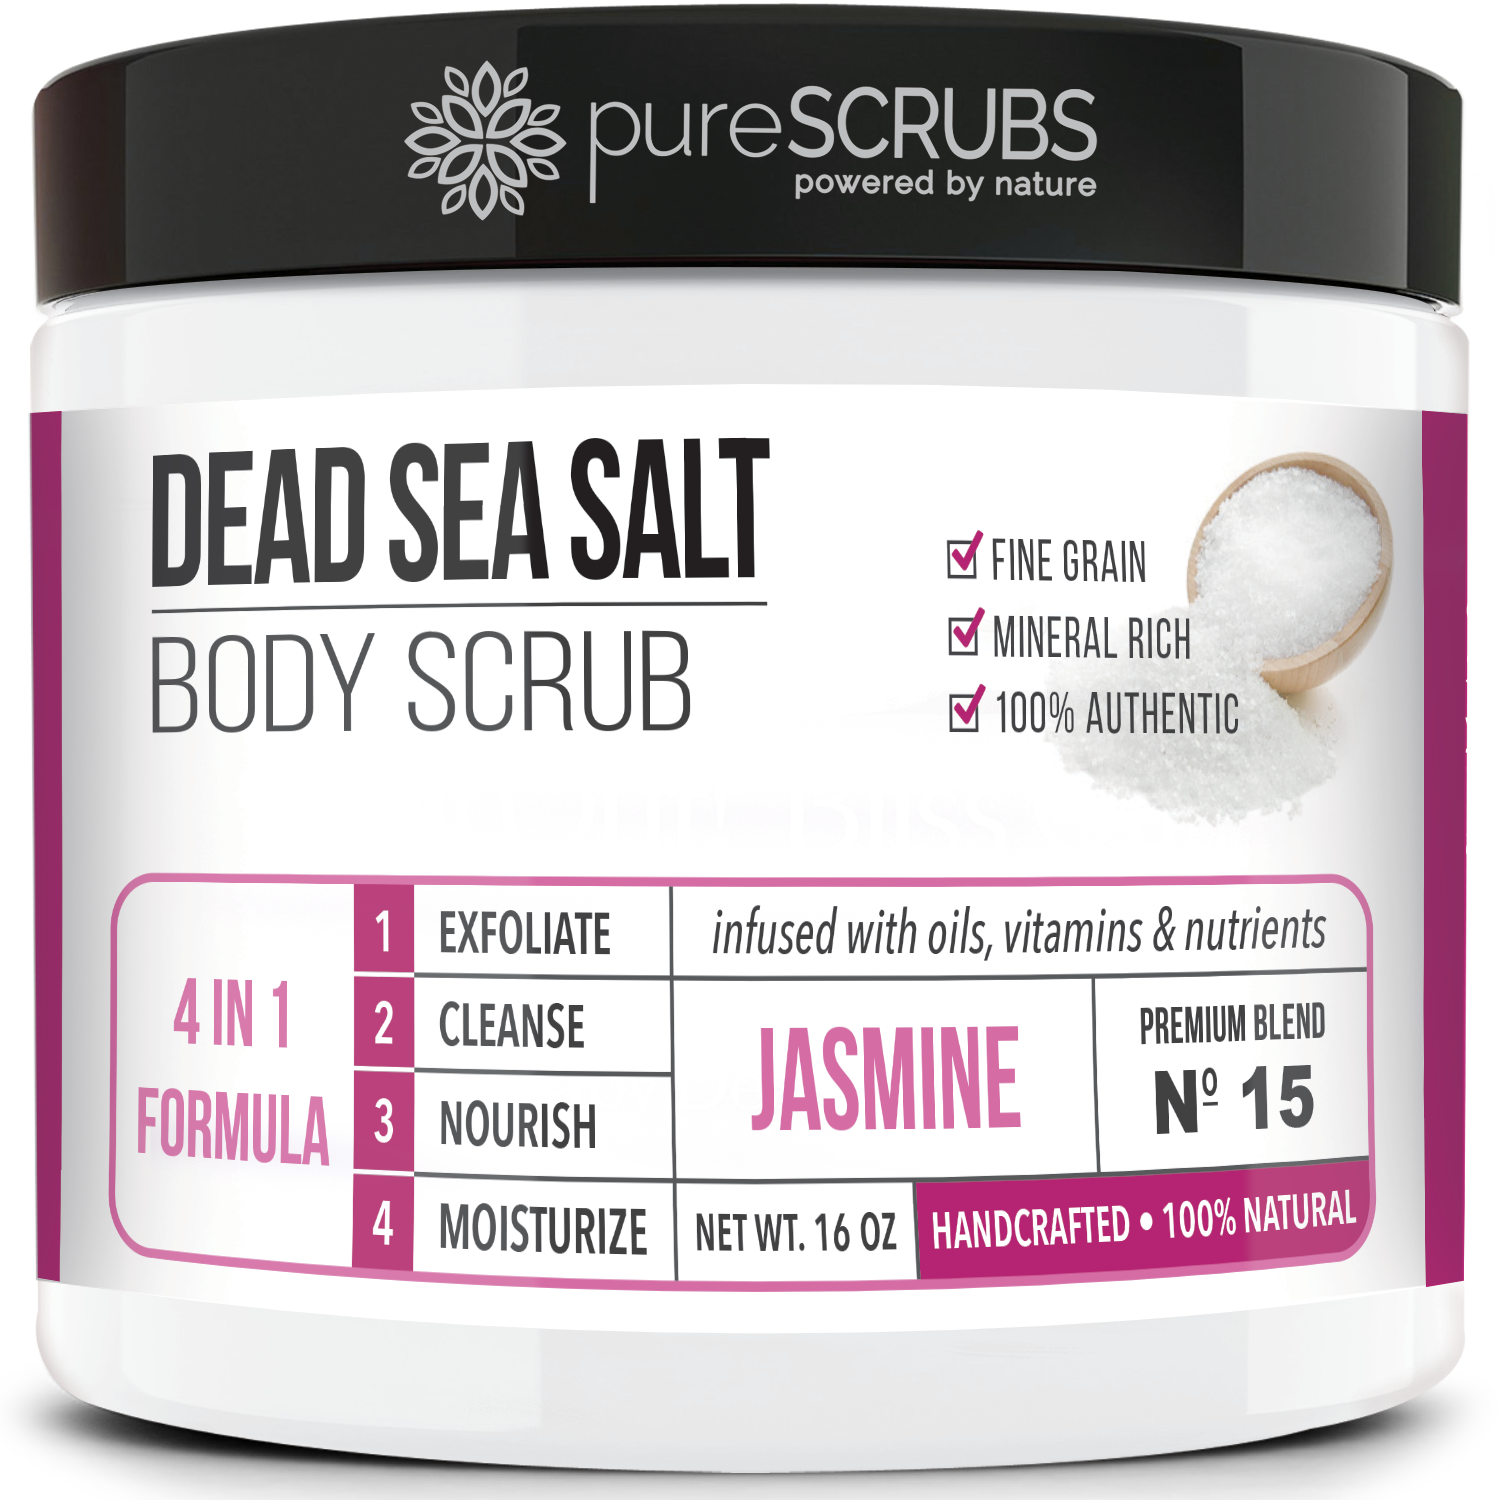 Jasmine Body Scrub / Dead Sea Salt / Premium Blend #15